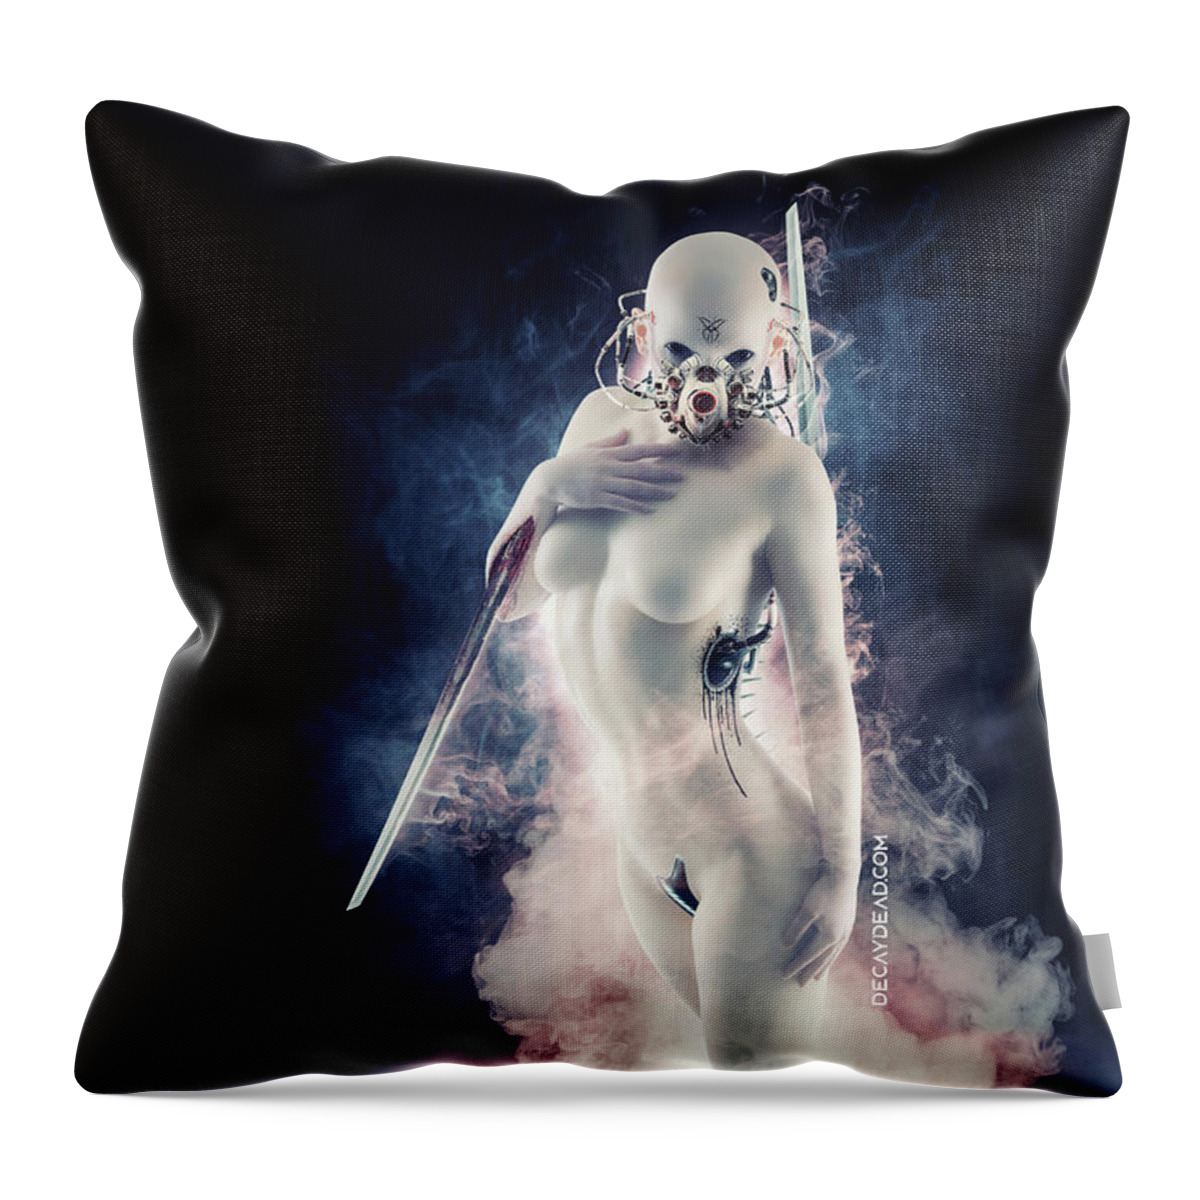 Argus Dorian Throw Pillow featuring the digital art Elina the main Assassin dark version by Argus Dorian